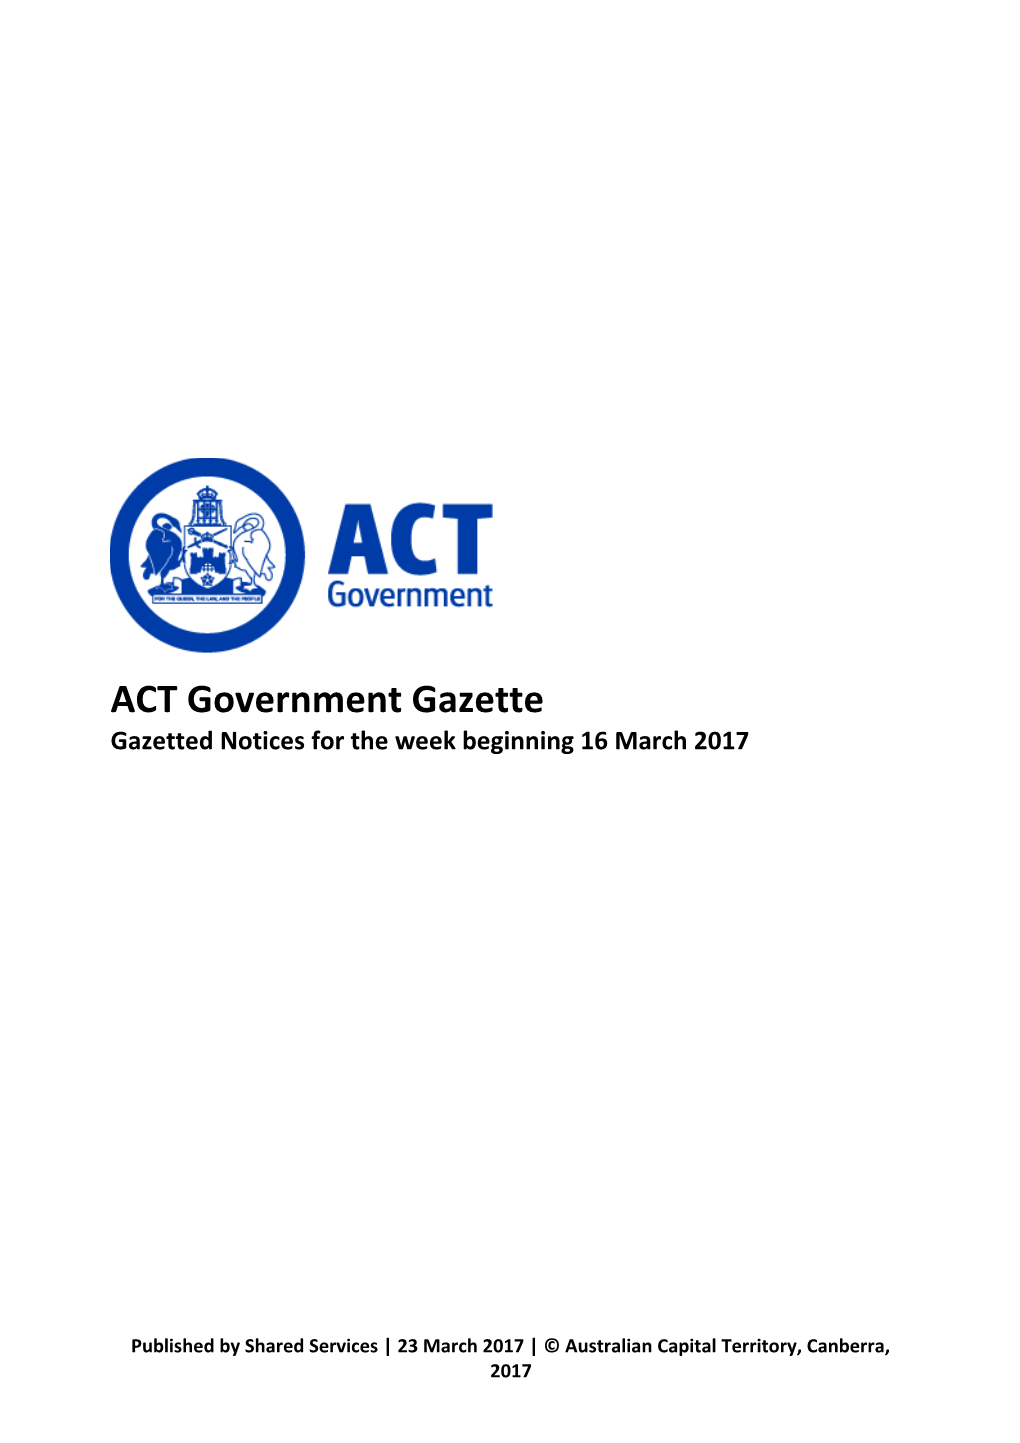 ACT Government Gazette 23 Mar 2017